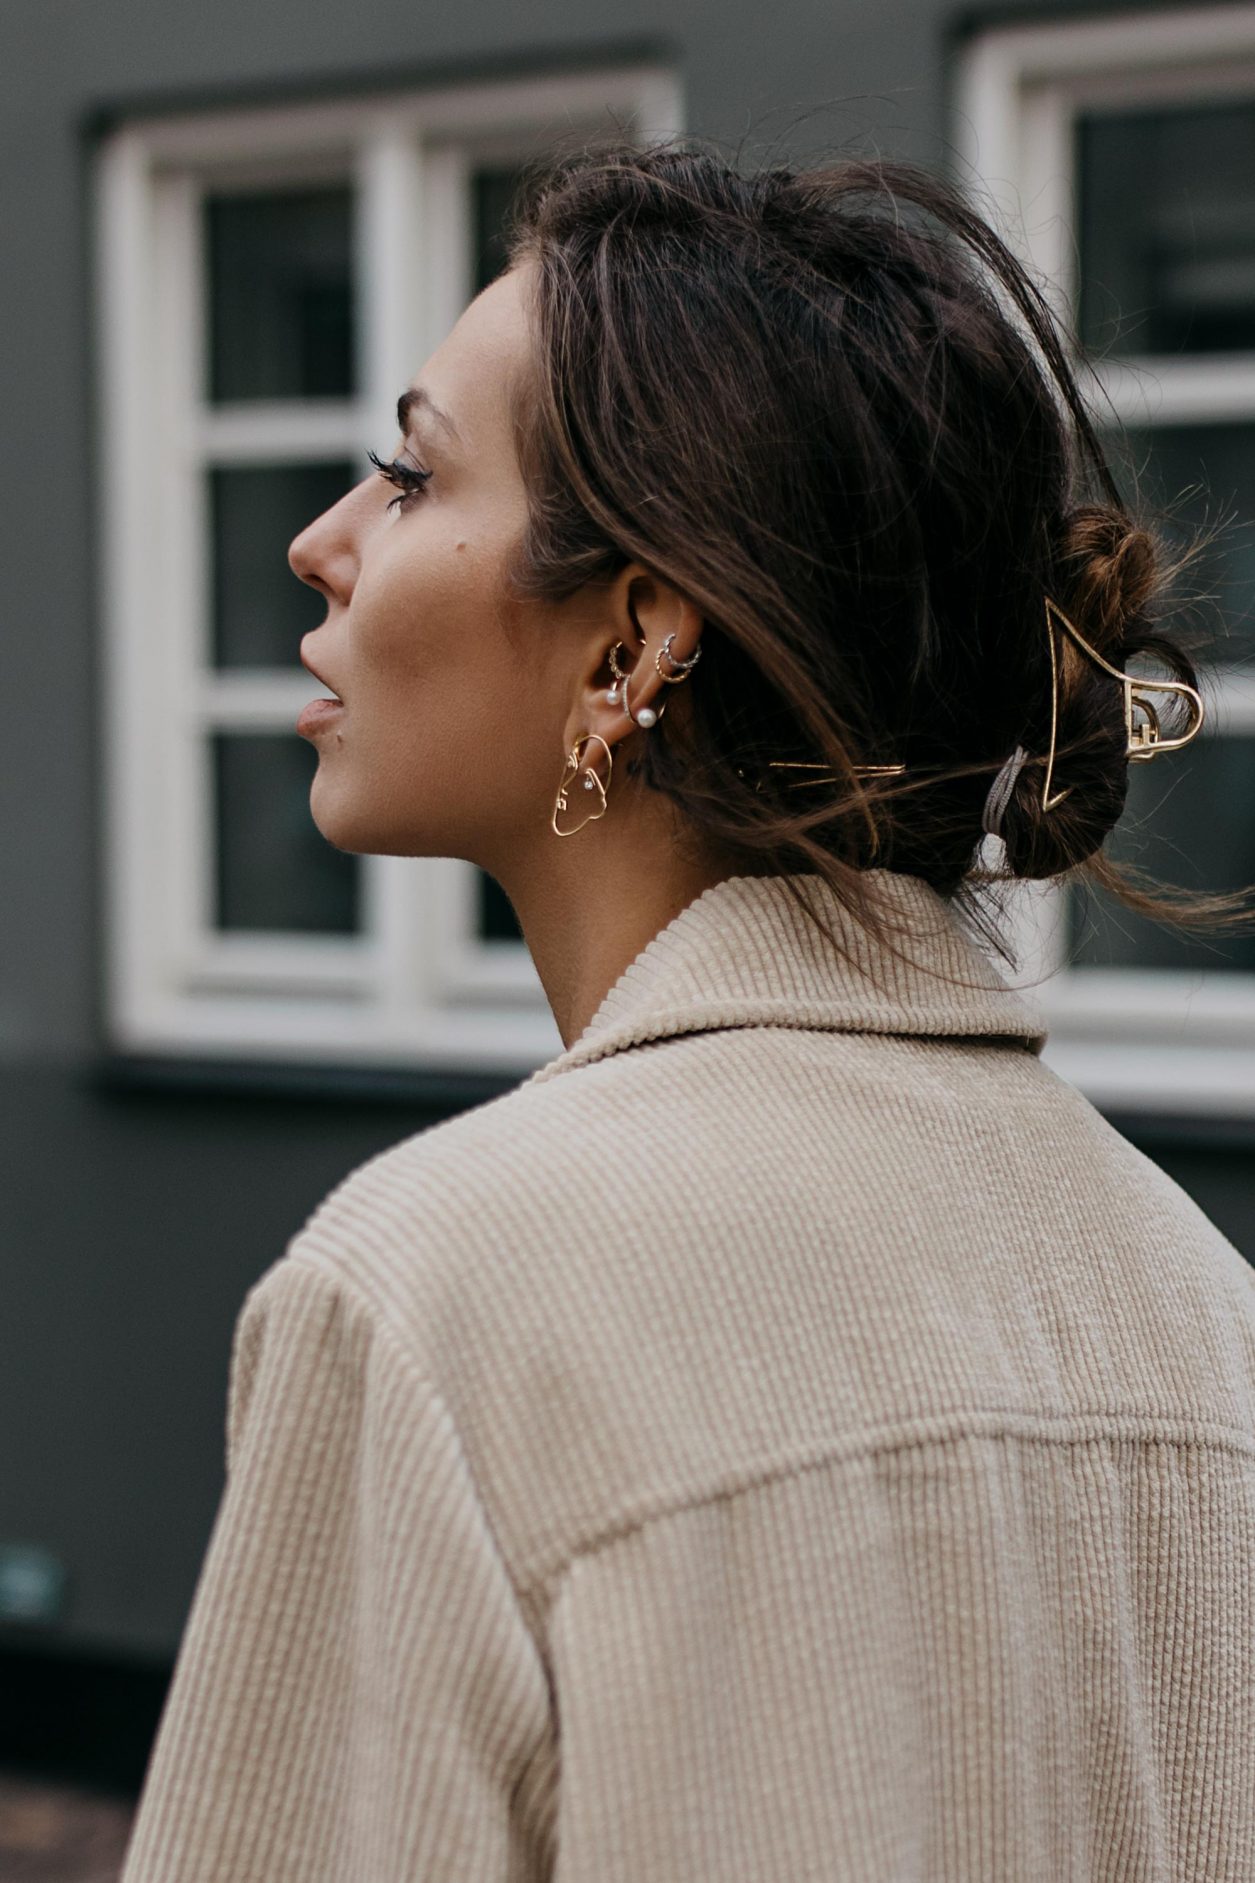 Copenhagen Fashion Week Streetstyle Portrait by Masha Sedgwick | Fashion and beauty blogger | Minimalistic Scandinavian style, wearing  minimalistic fine jewelry Face Earring by Persee, pearl ear cuffs: Maria Black